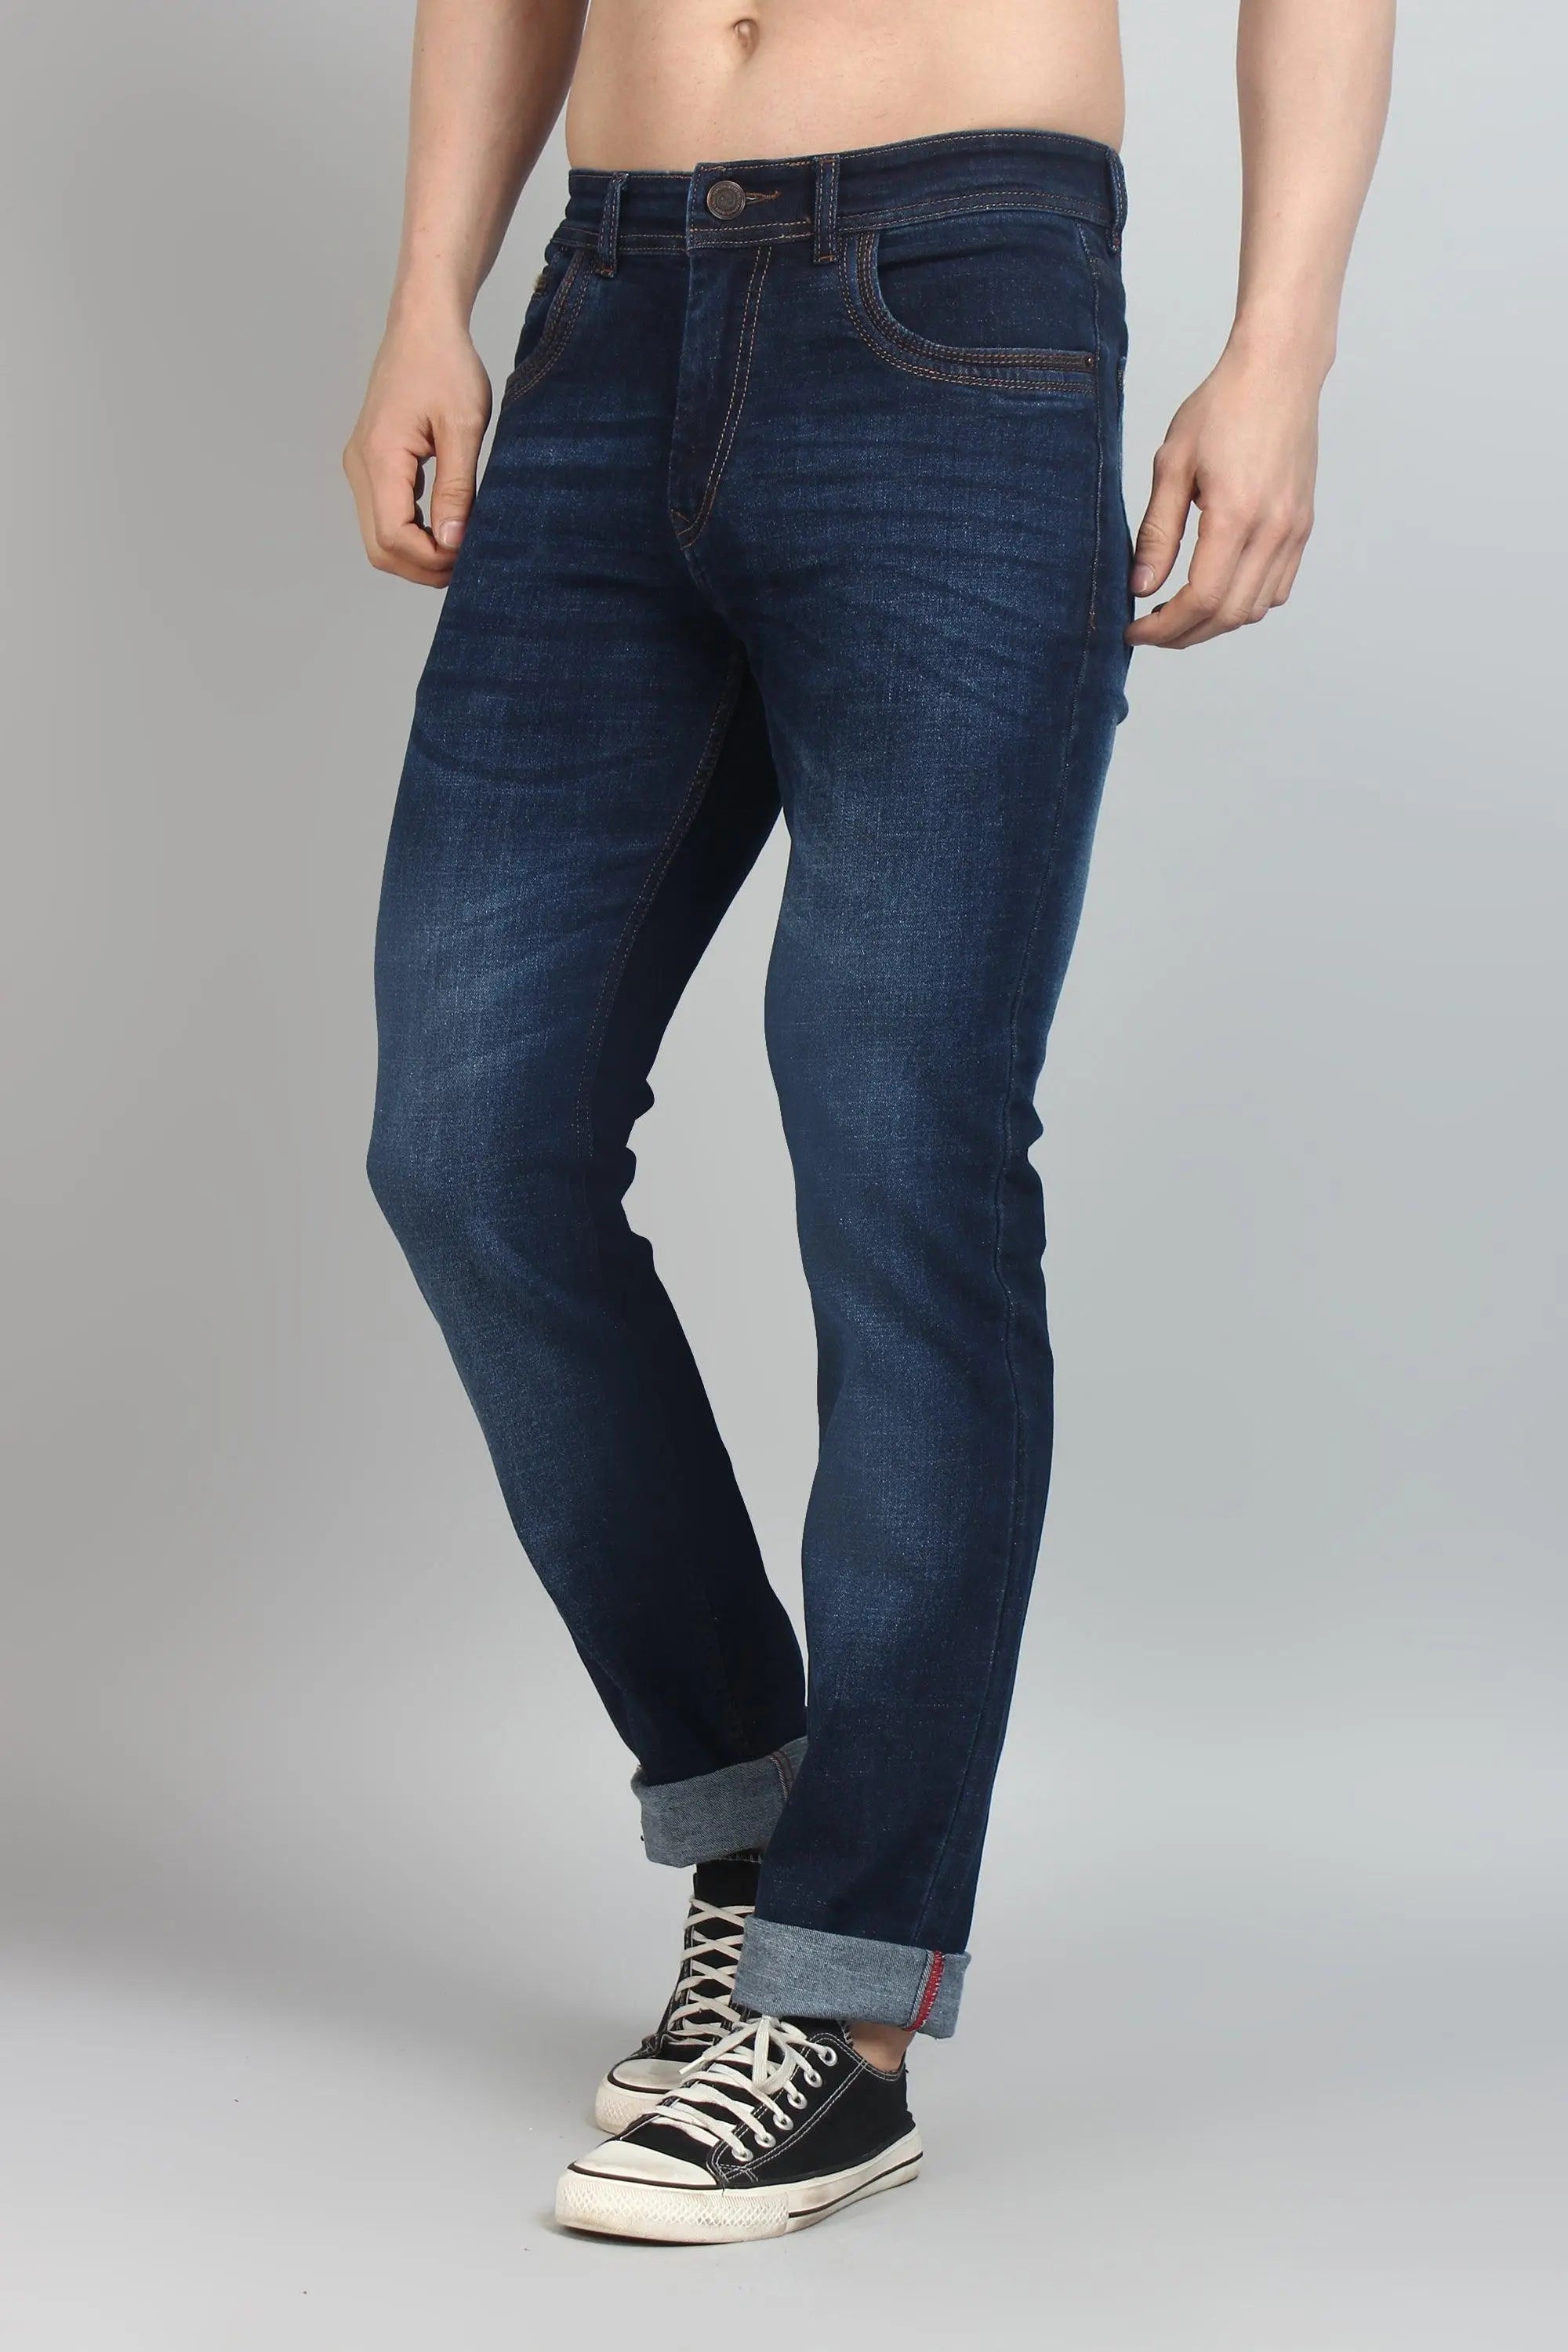 Plain Men Dark Blue Slim Fit Denim Jeans, Waist Size: 28-32 inch at Rs  599/piece in Barpeta Road